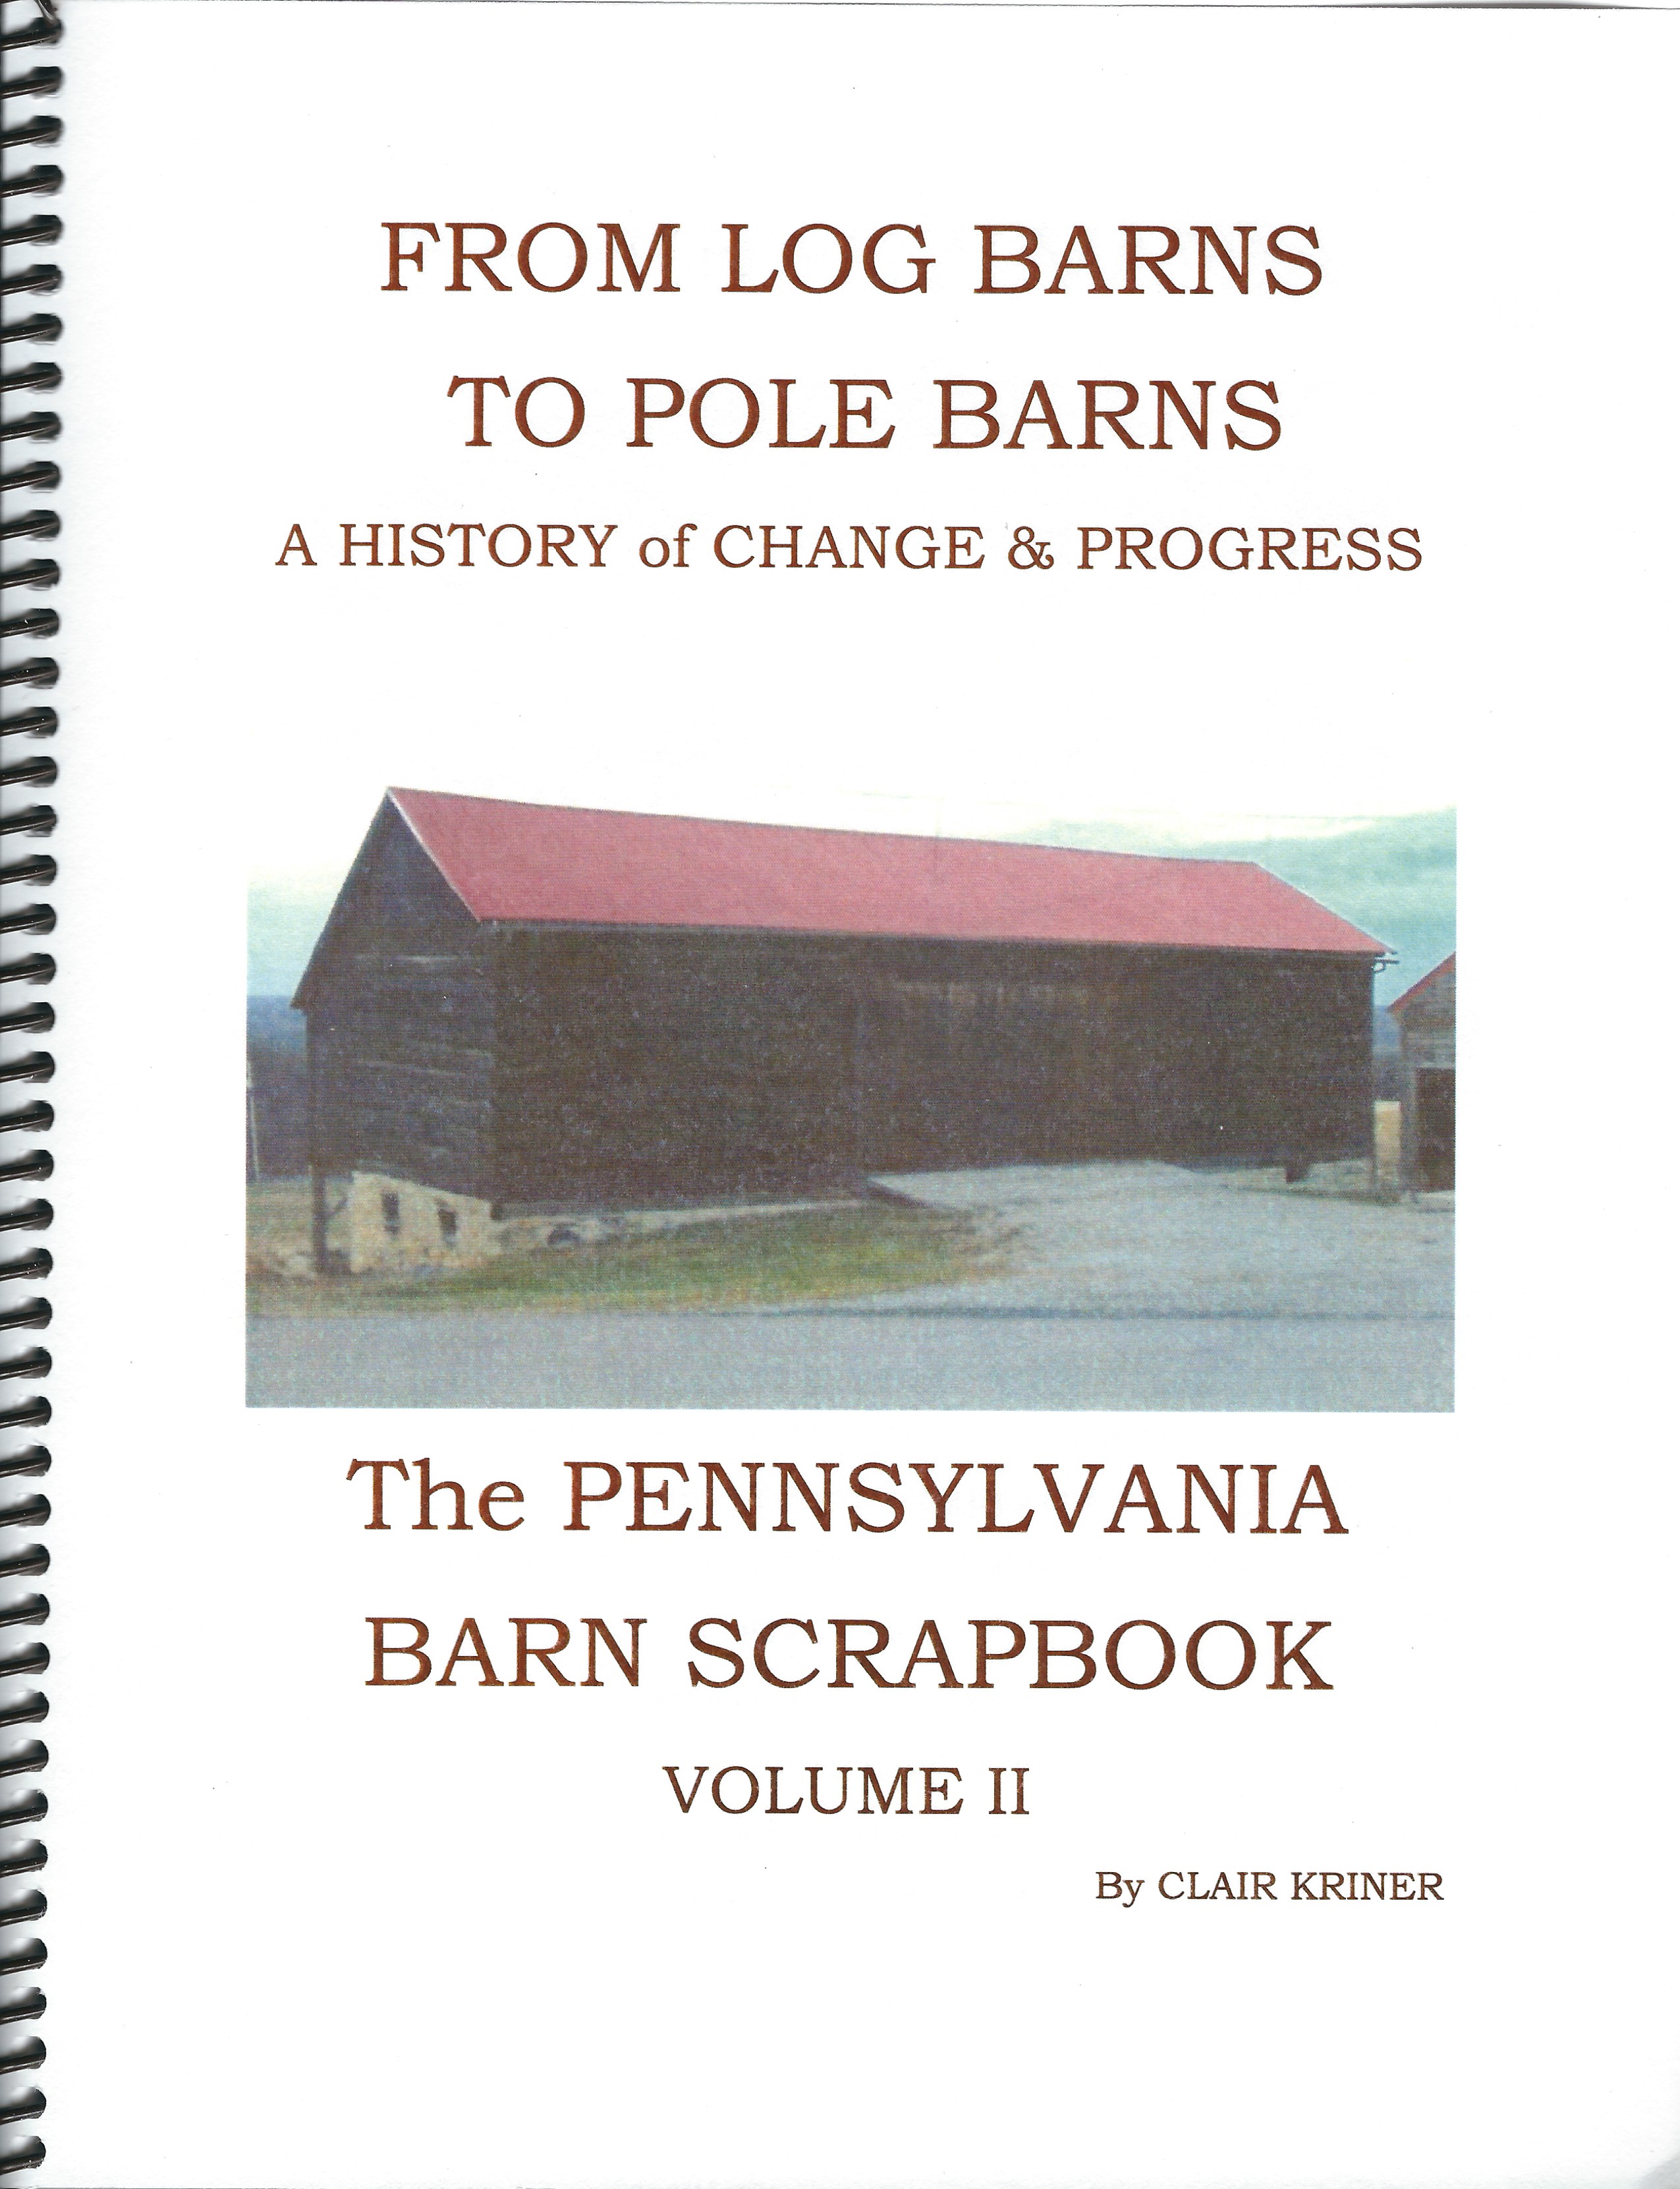 The Pennsylvania Barn Scrapebook; From Log Barns to Pole Barns